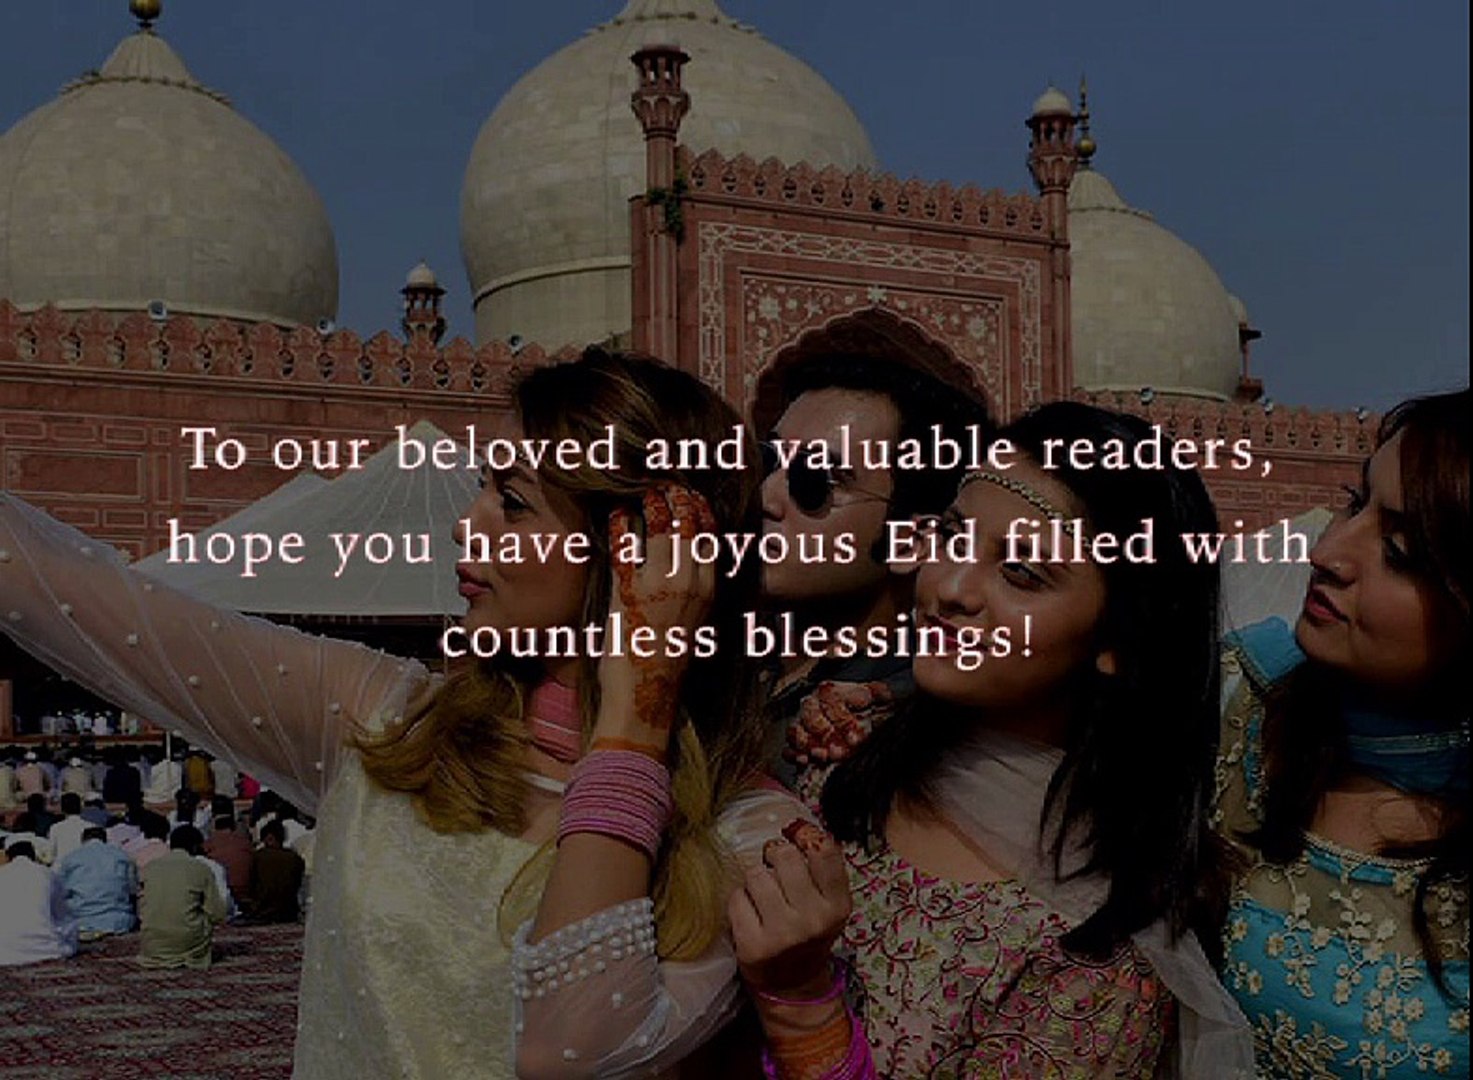 Eid Mubarak from Tribune Blogs!